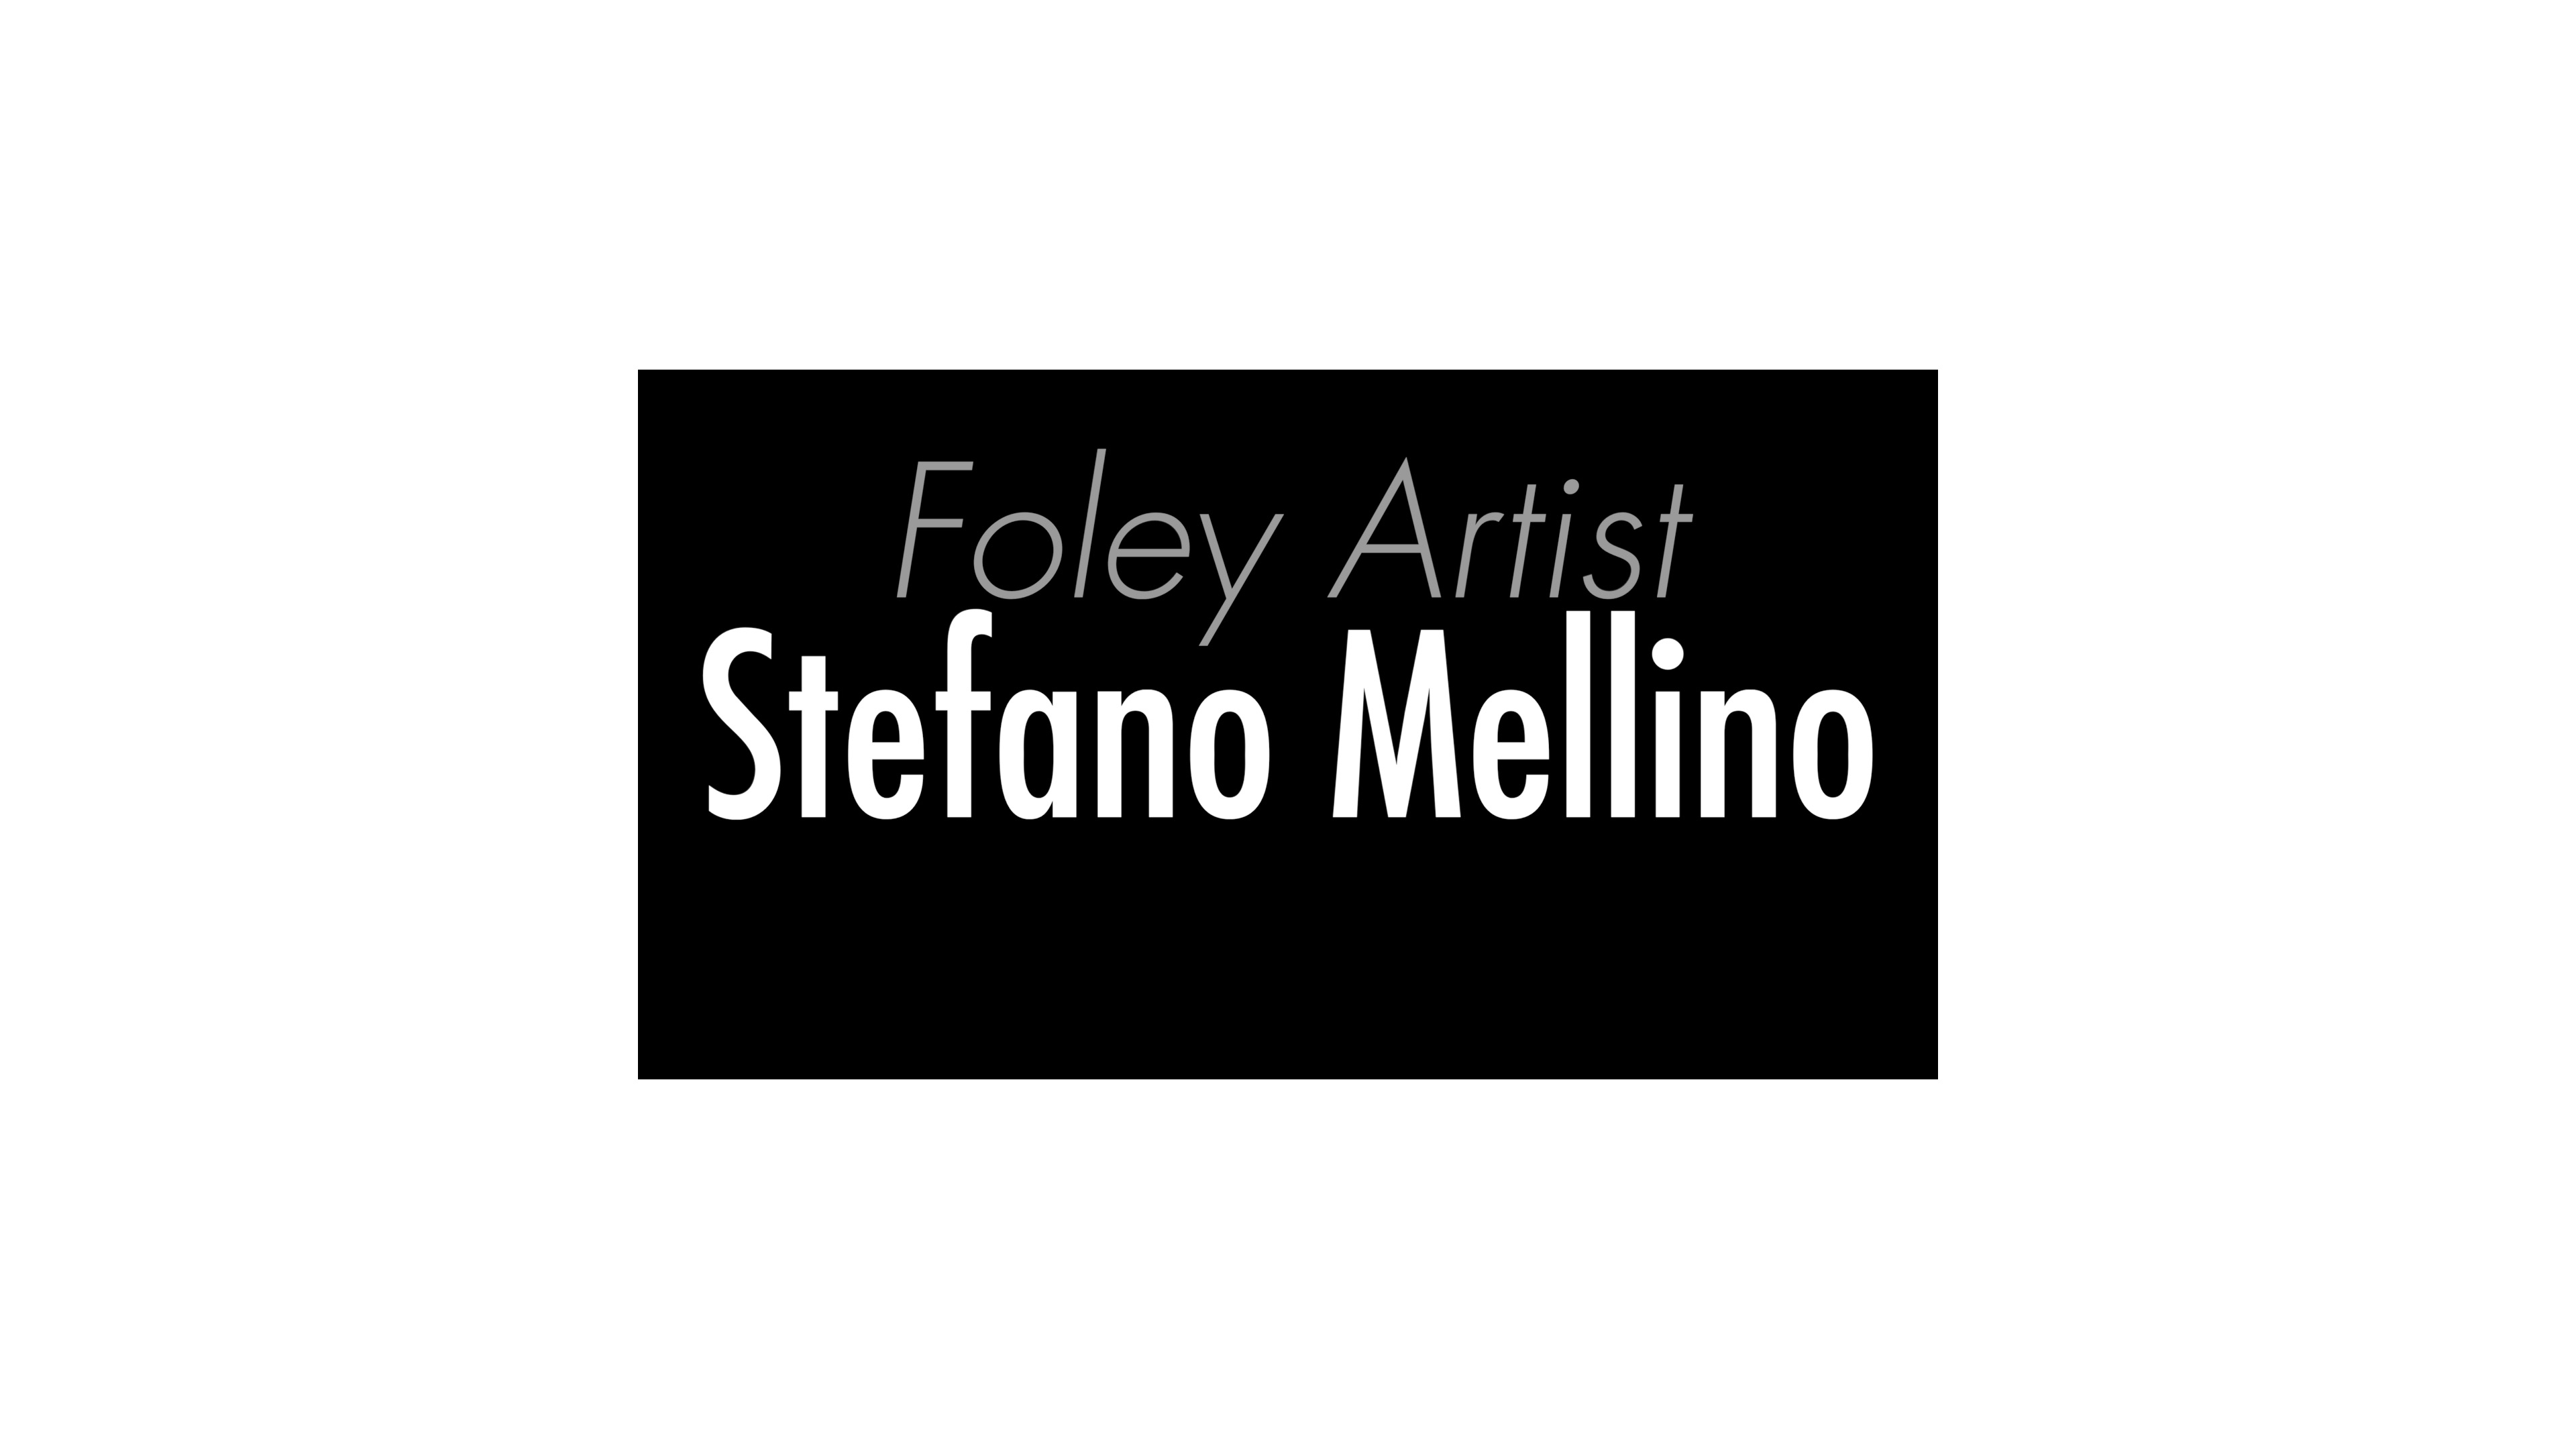 Foley Artist Stefano Mellino